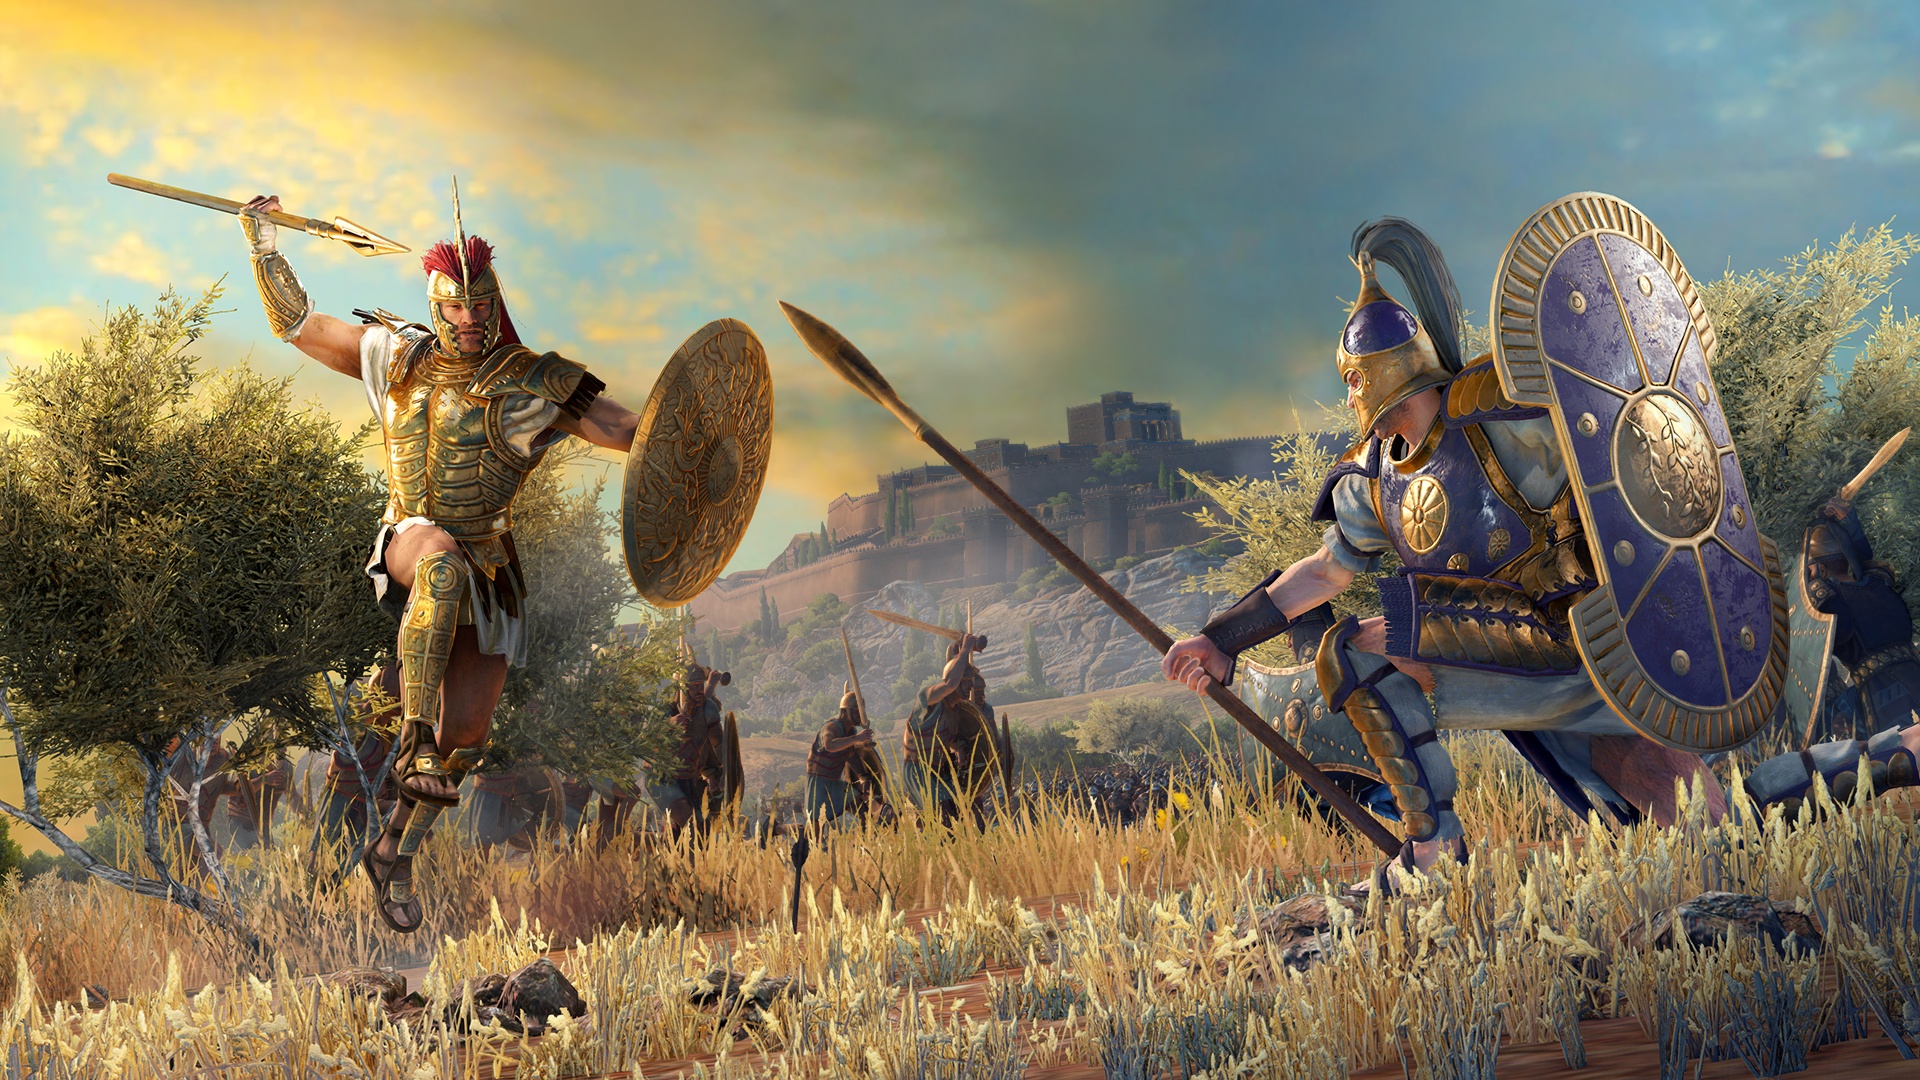 HD wallpaper of A Total War Saga: TROY depicting epic battle scene with warriors, ideal for desktop background.